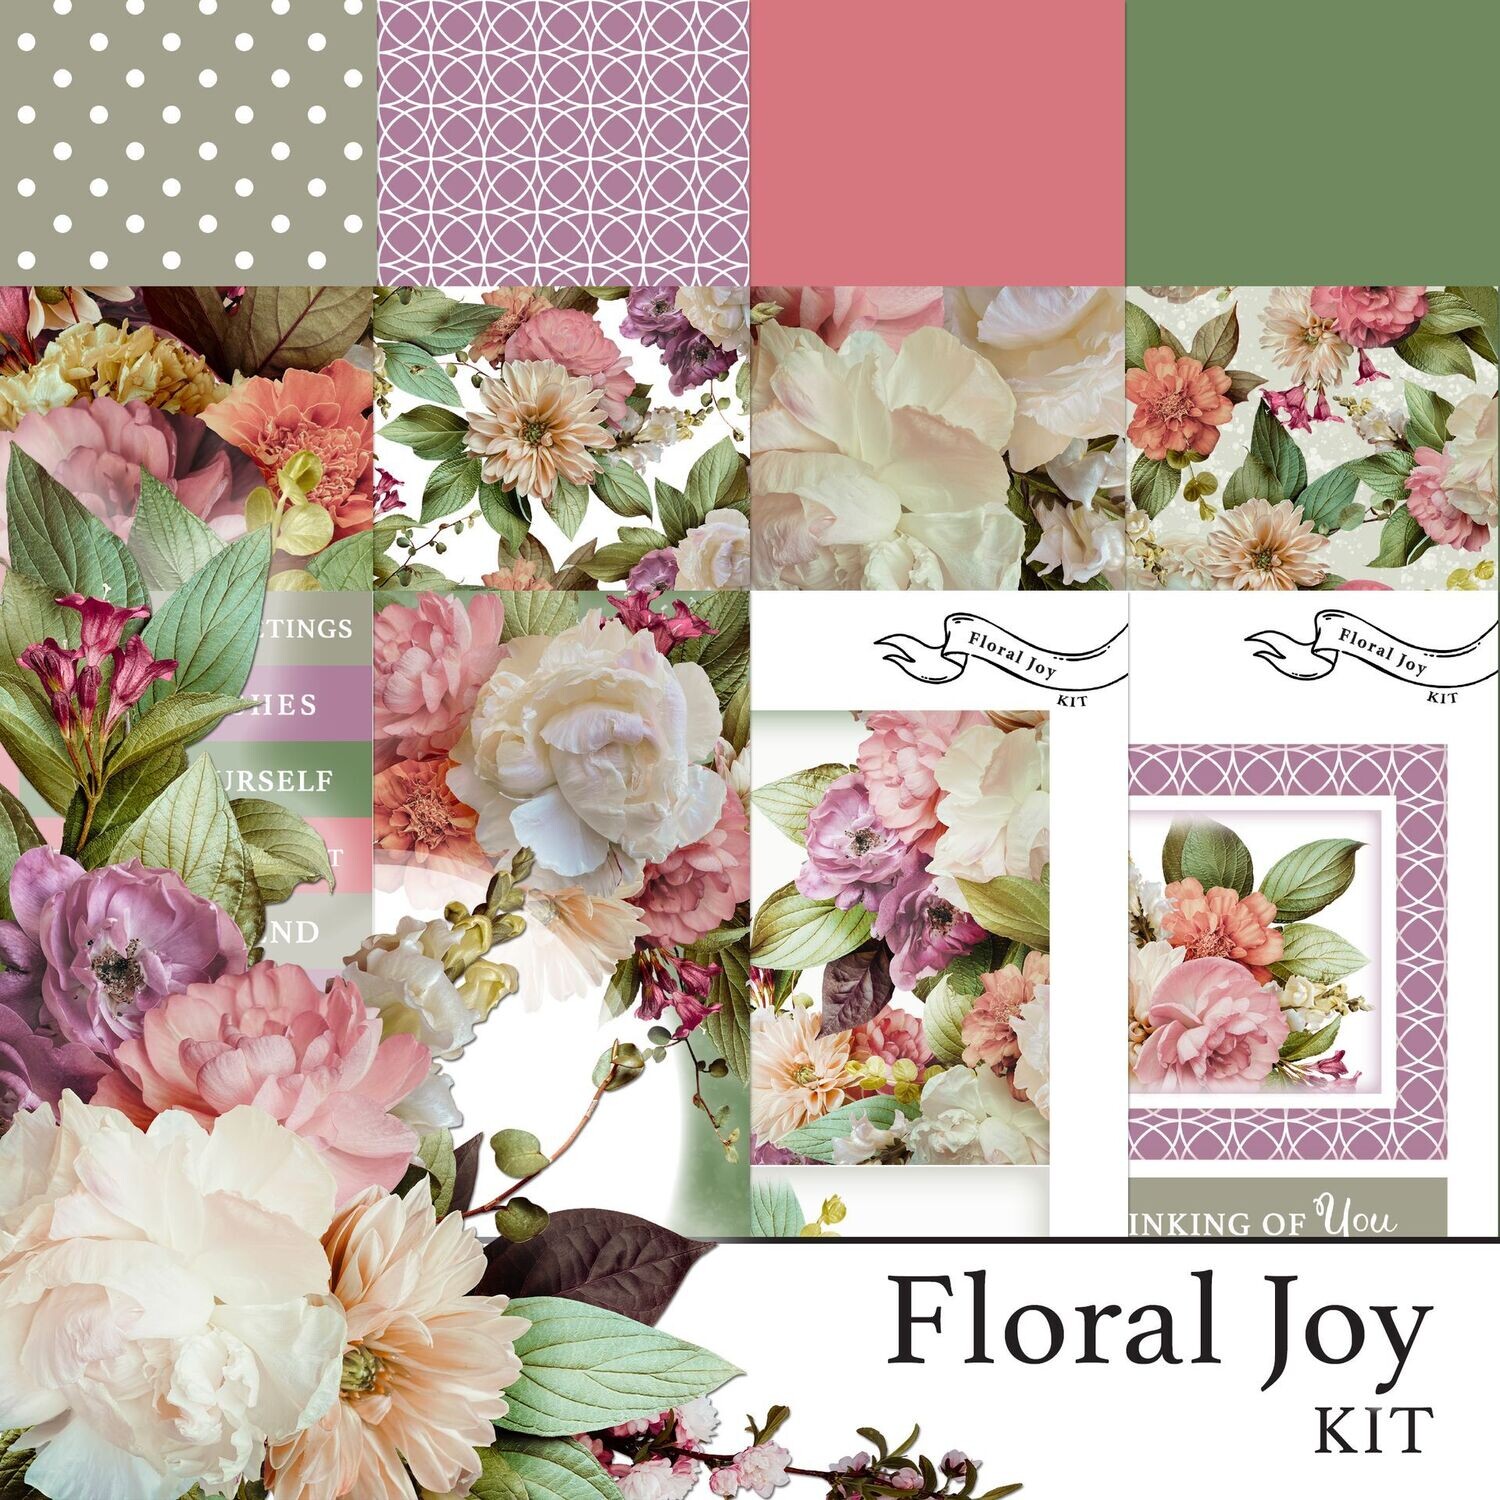 Floral Joy Digital Kit